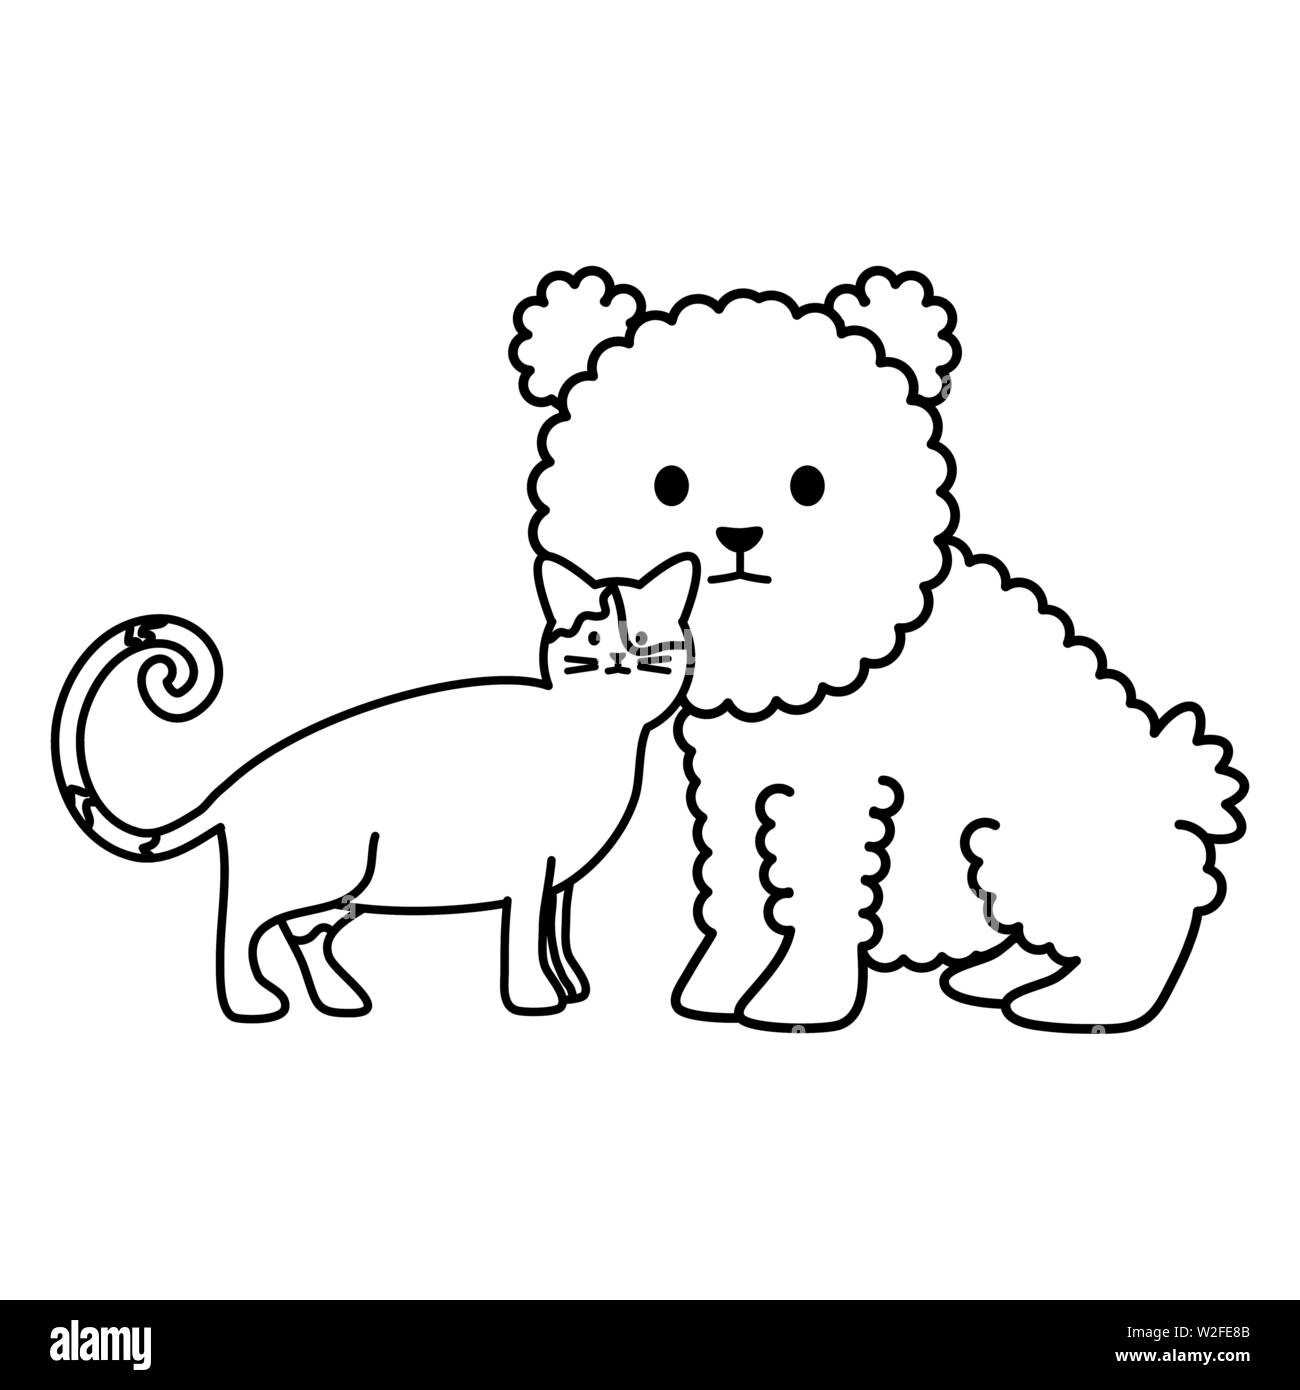 cute cat and dog mascots adorables characters vector illustration design Stock Vector